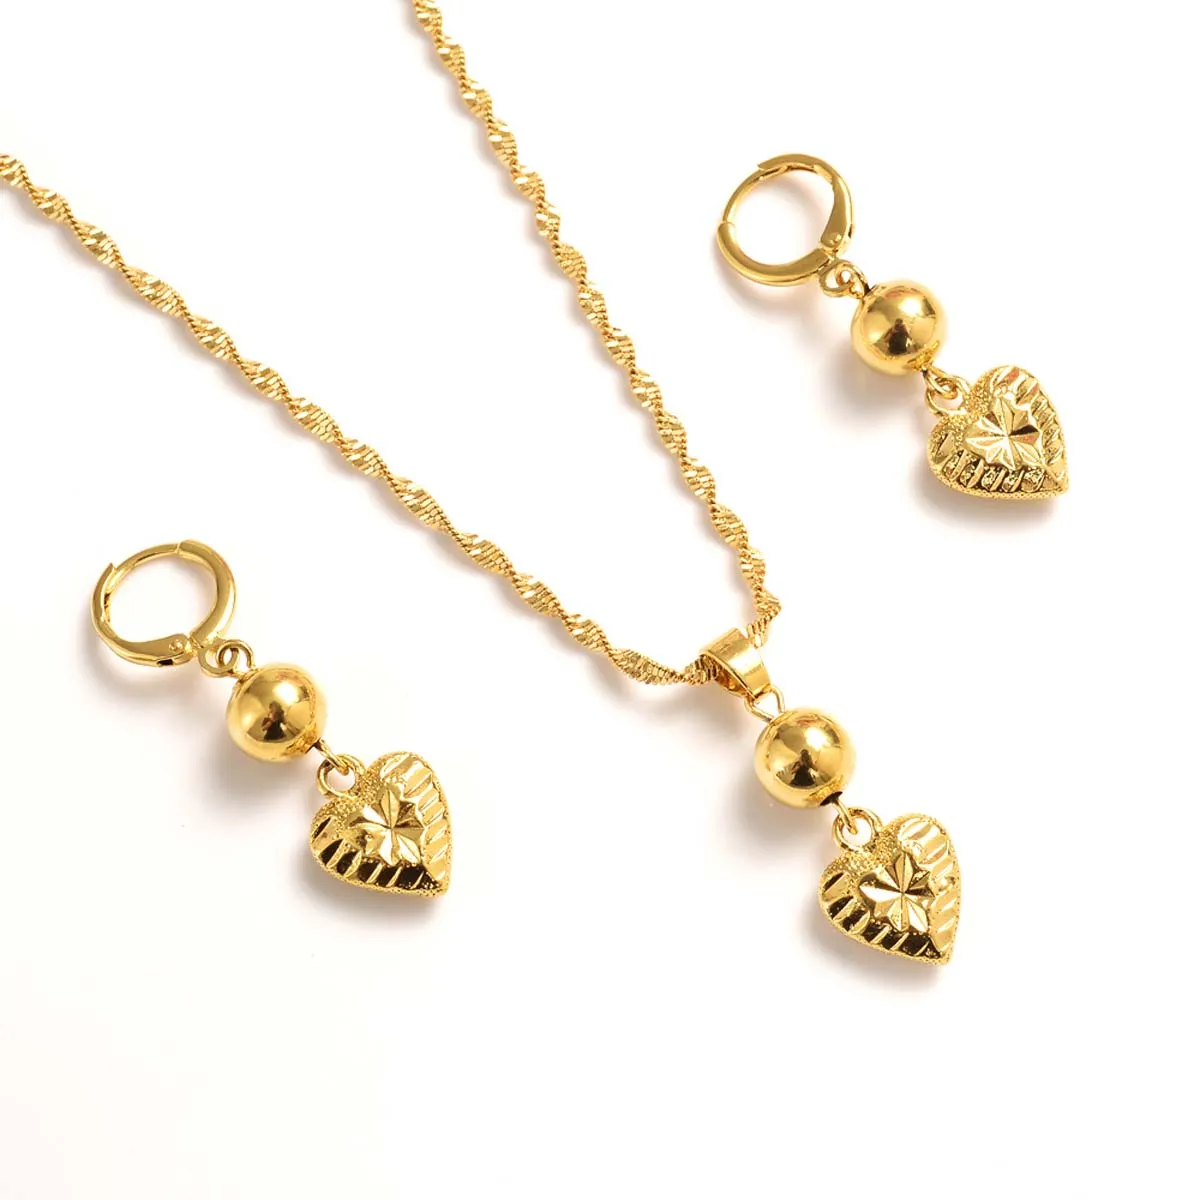 Conjuntos de joyas de corazón Collares clásicos Pendientes Conjunto 18K Oro fino sólido Árabe / África Boda Novia Dote mujeres niñas